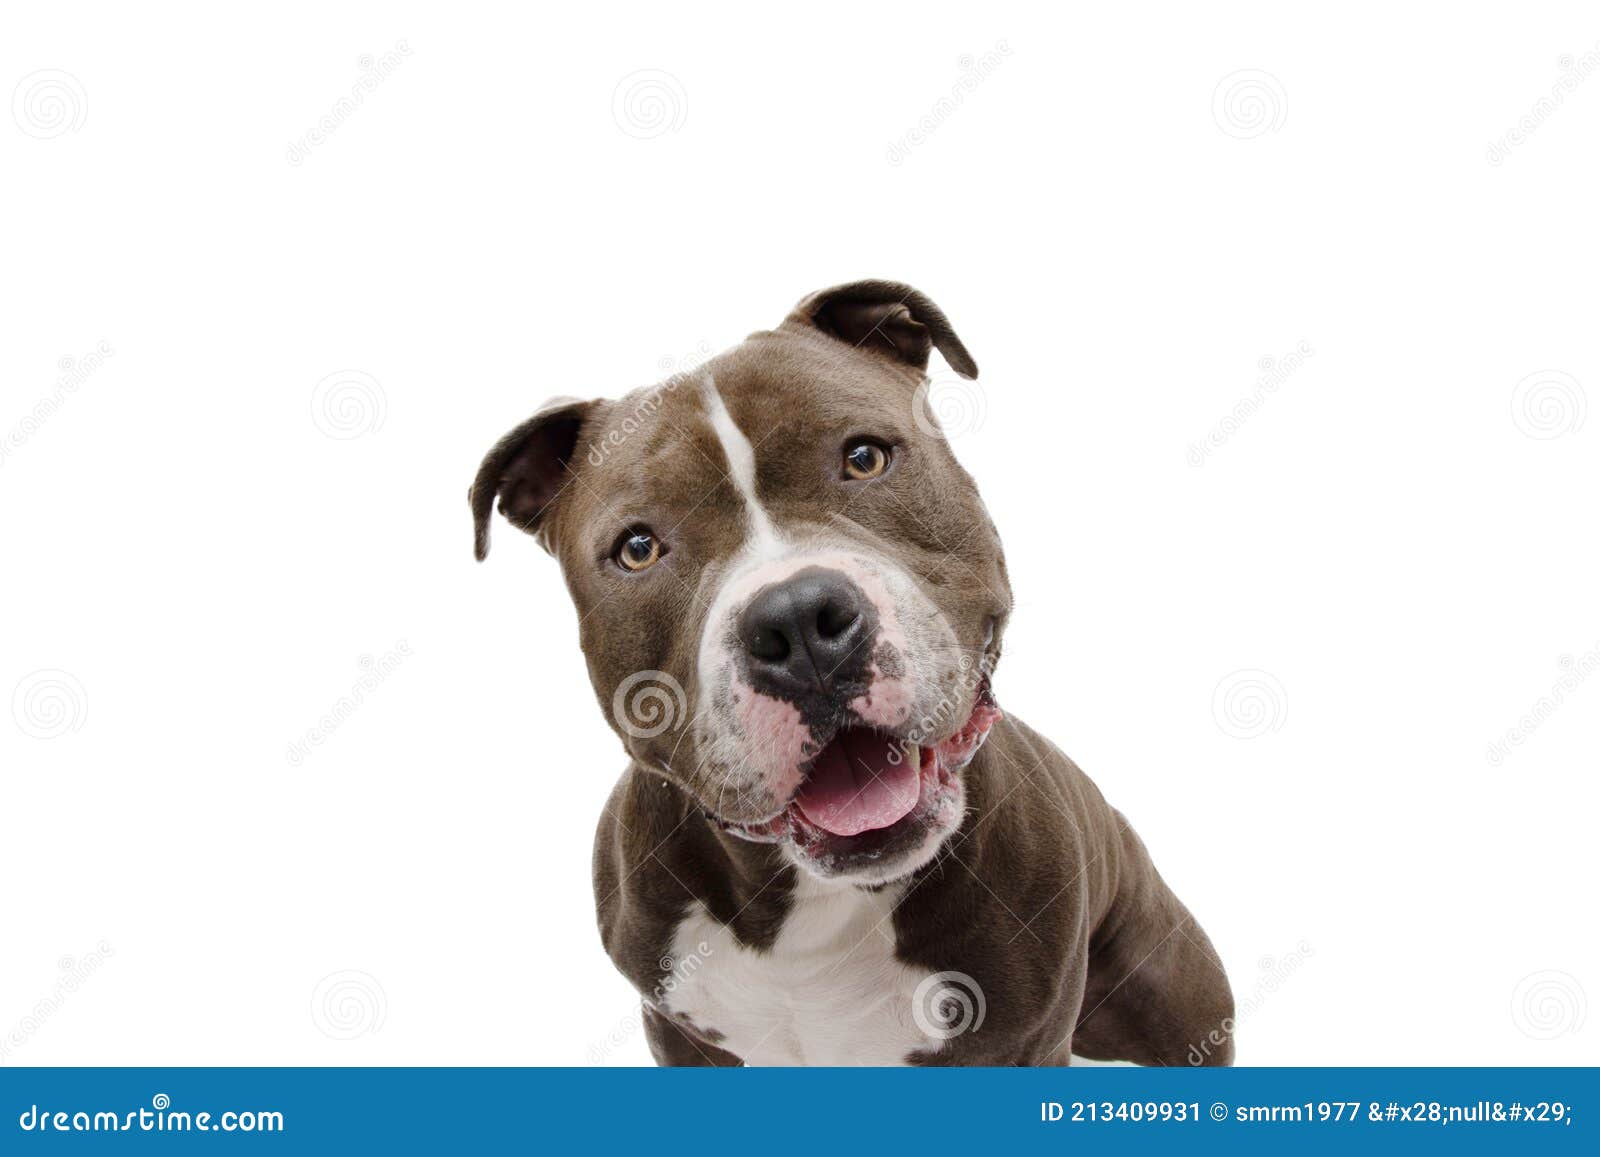 Bully dog Stock Photos, Royalty Free Bully dog Images